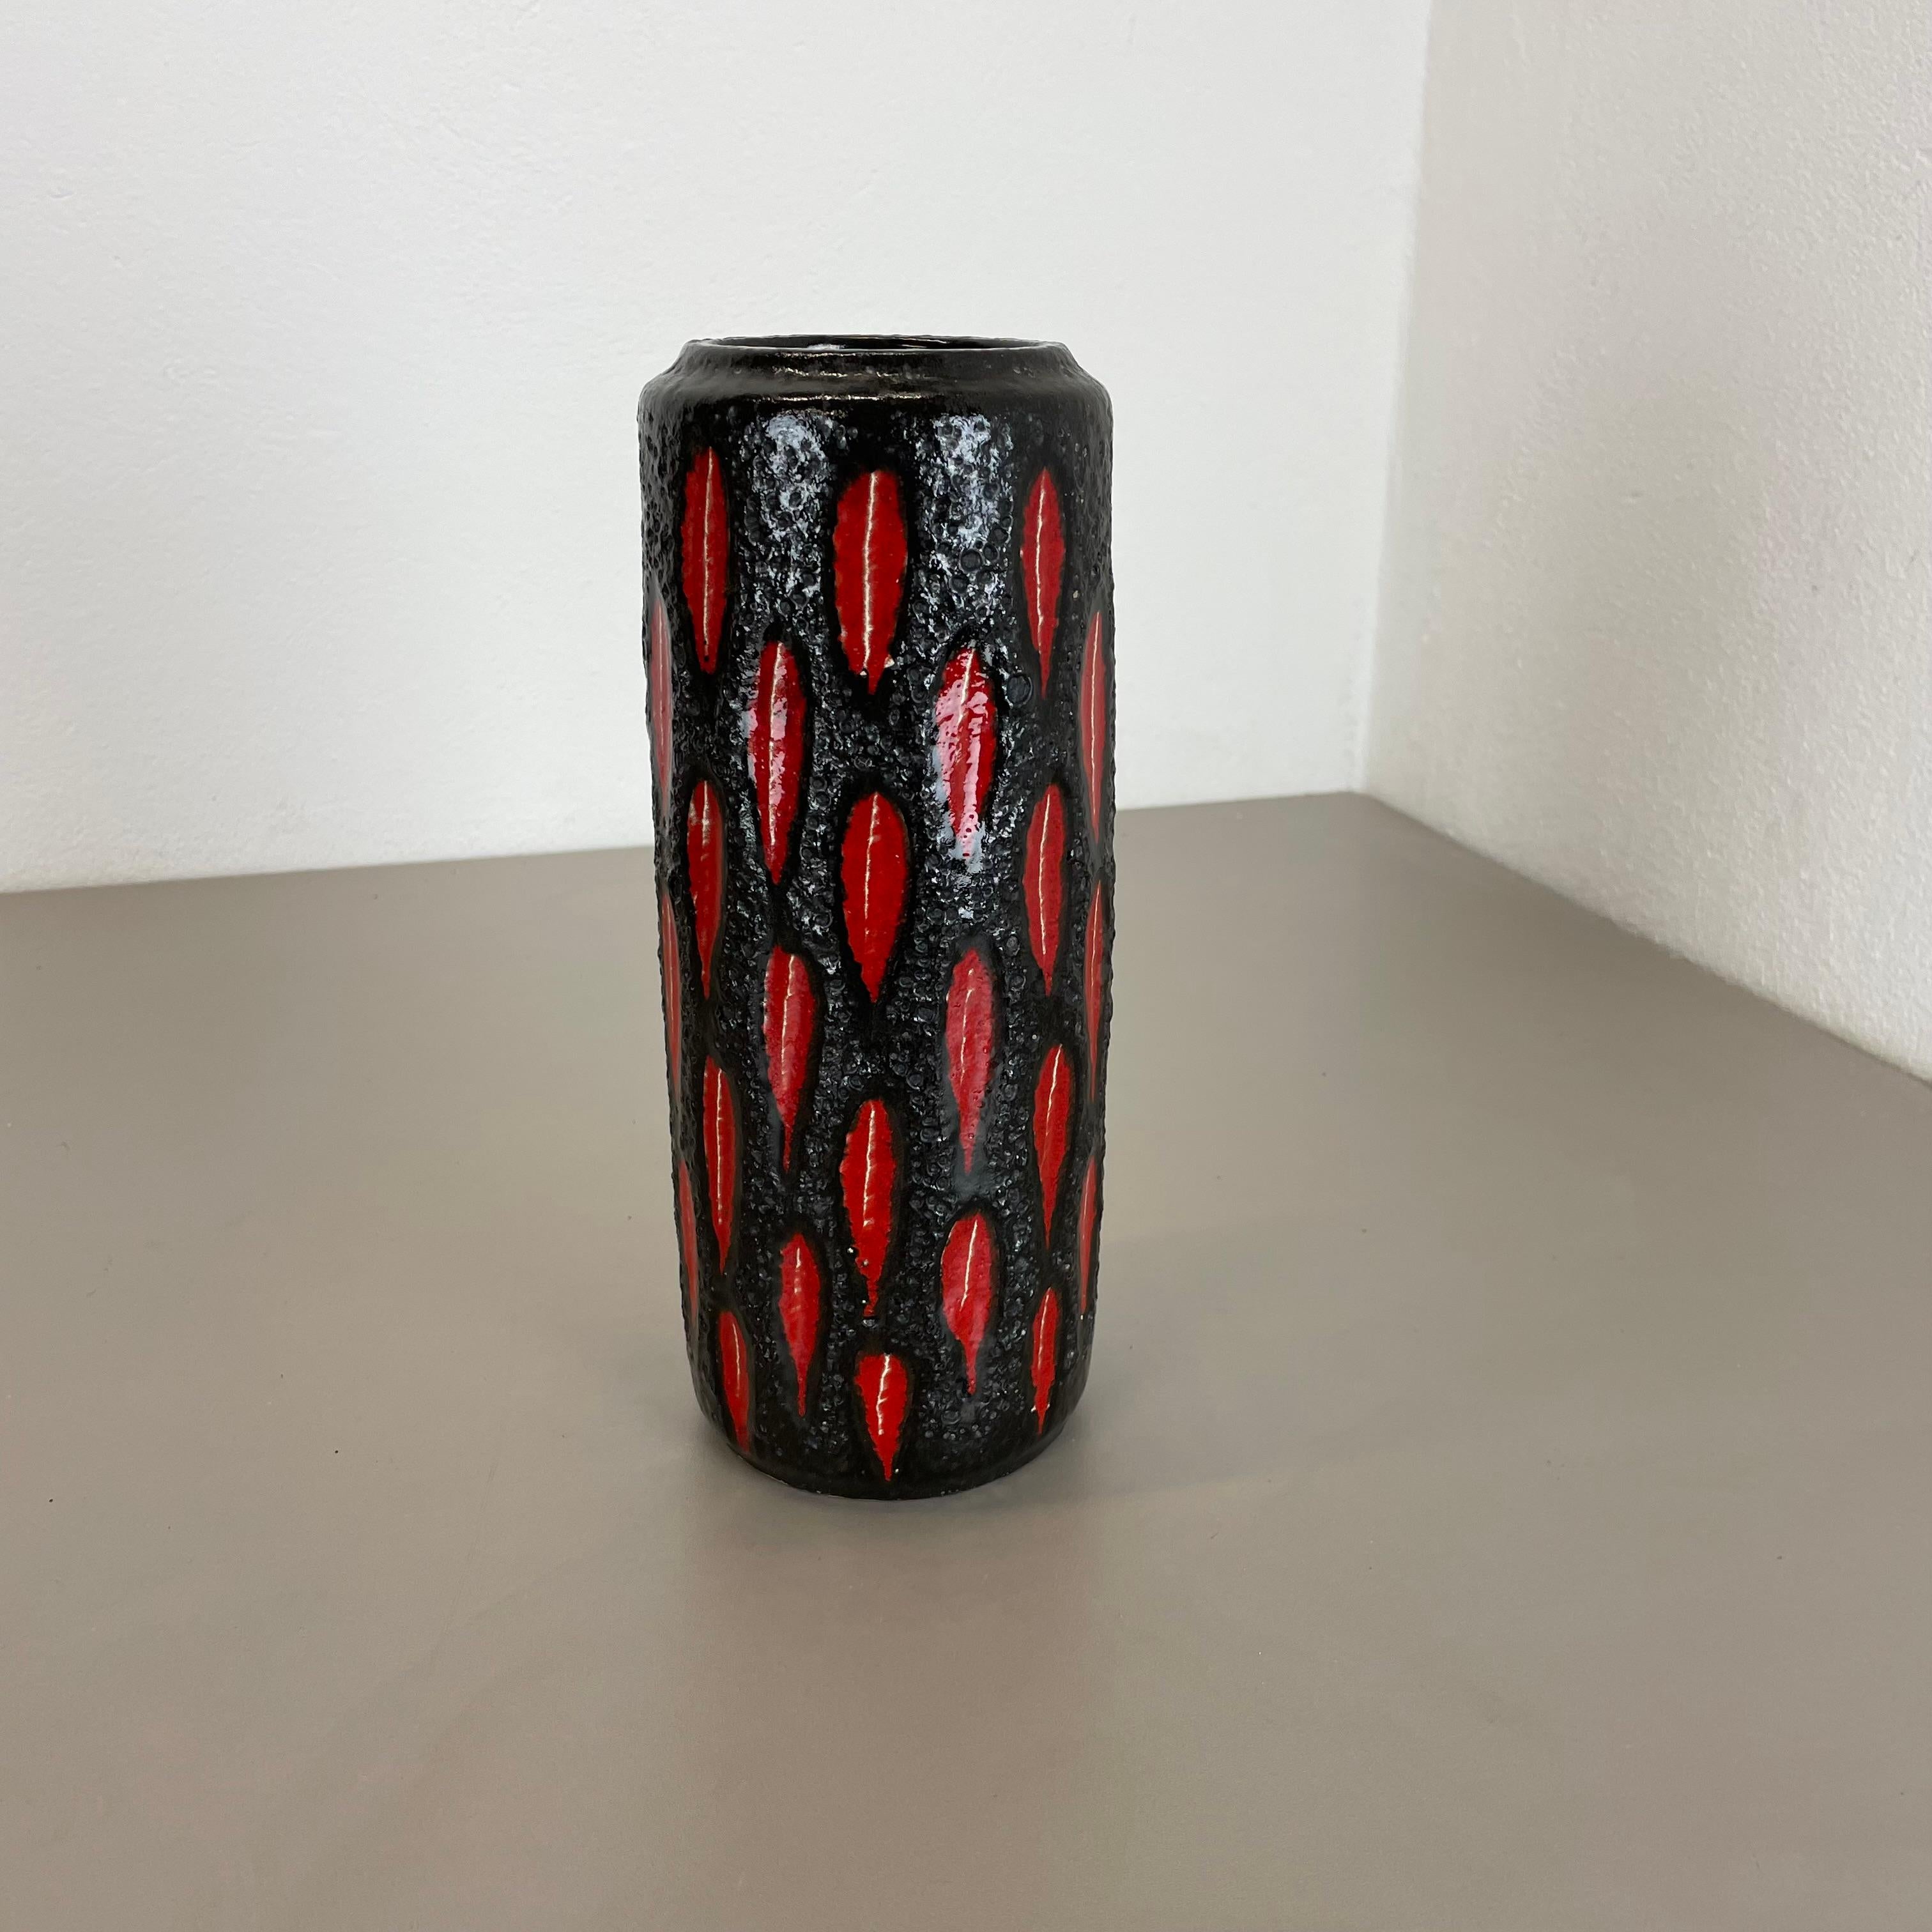 Article :

Fat lava art vase super rare black red 